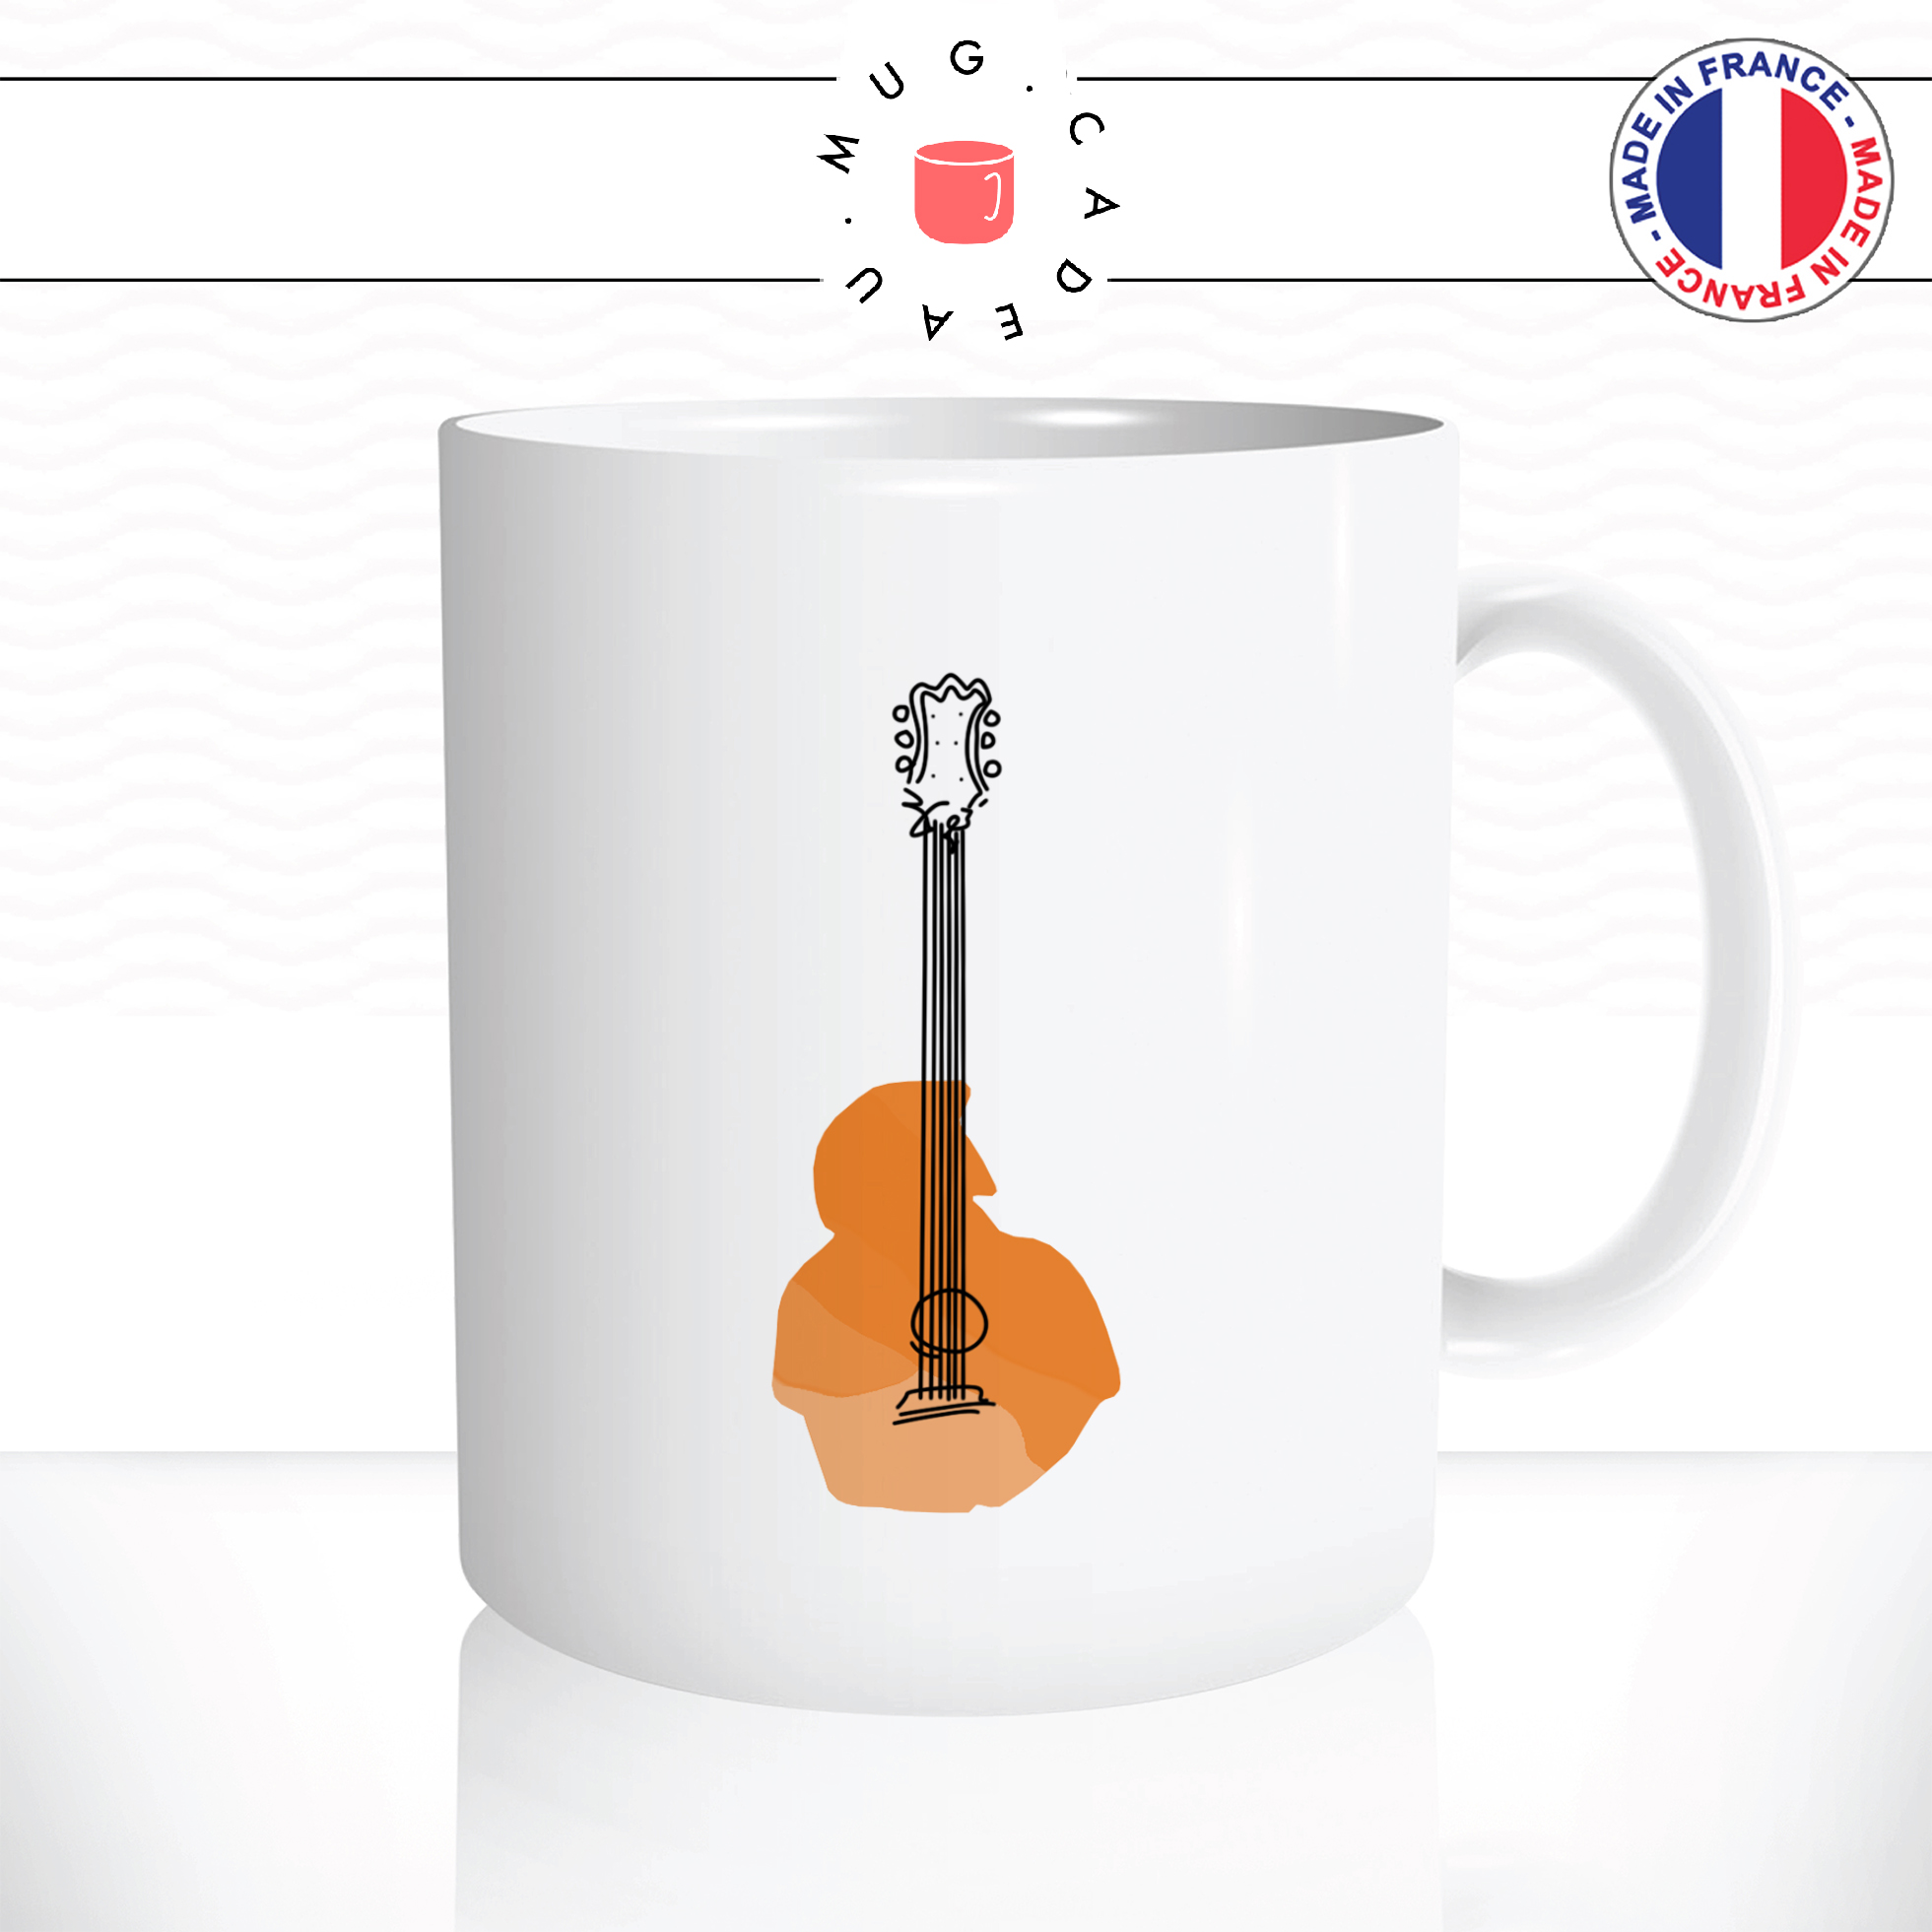 mug-tasse-ref7-musique-guitare-dessin-orange-cafe-the-mugs-tasses-personnalise-anse-droite